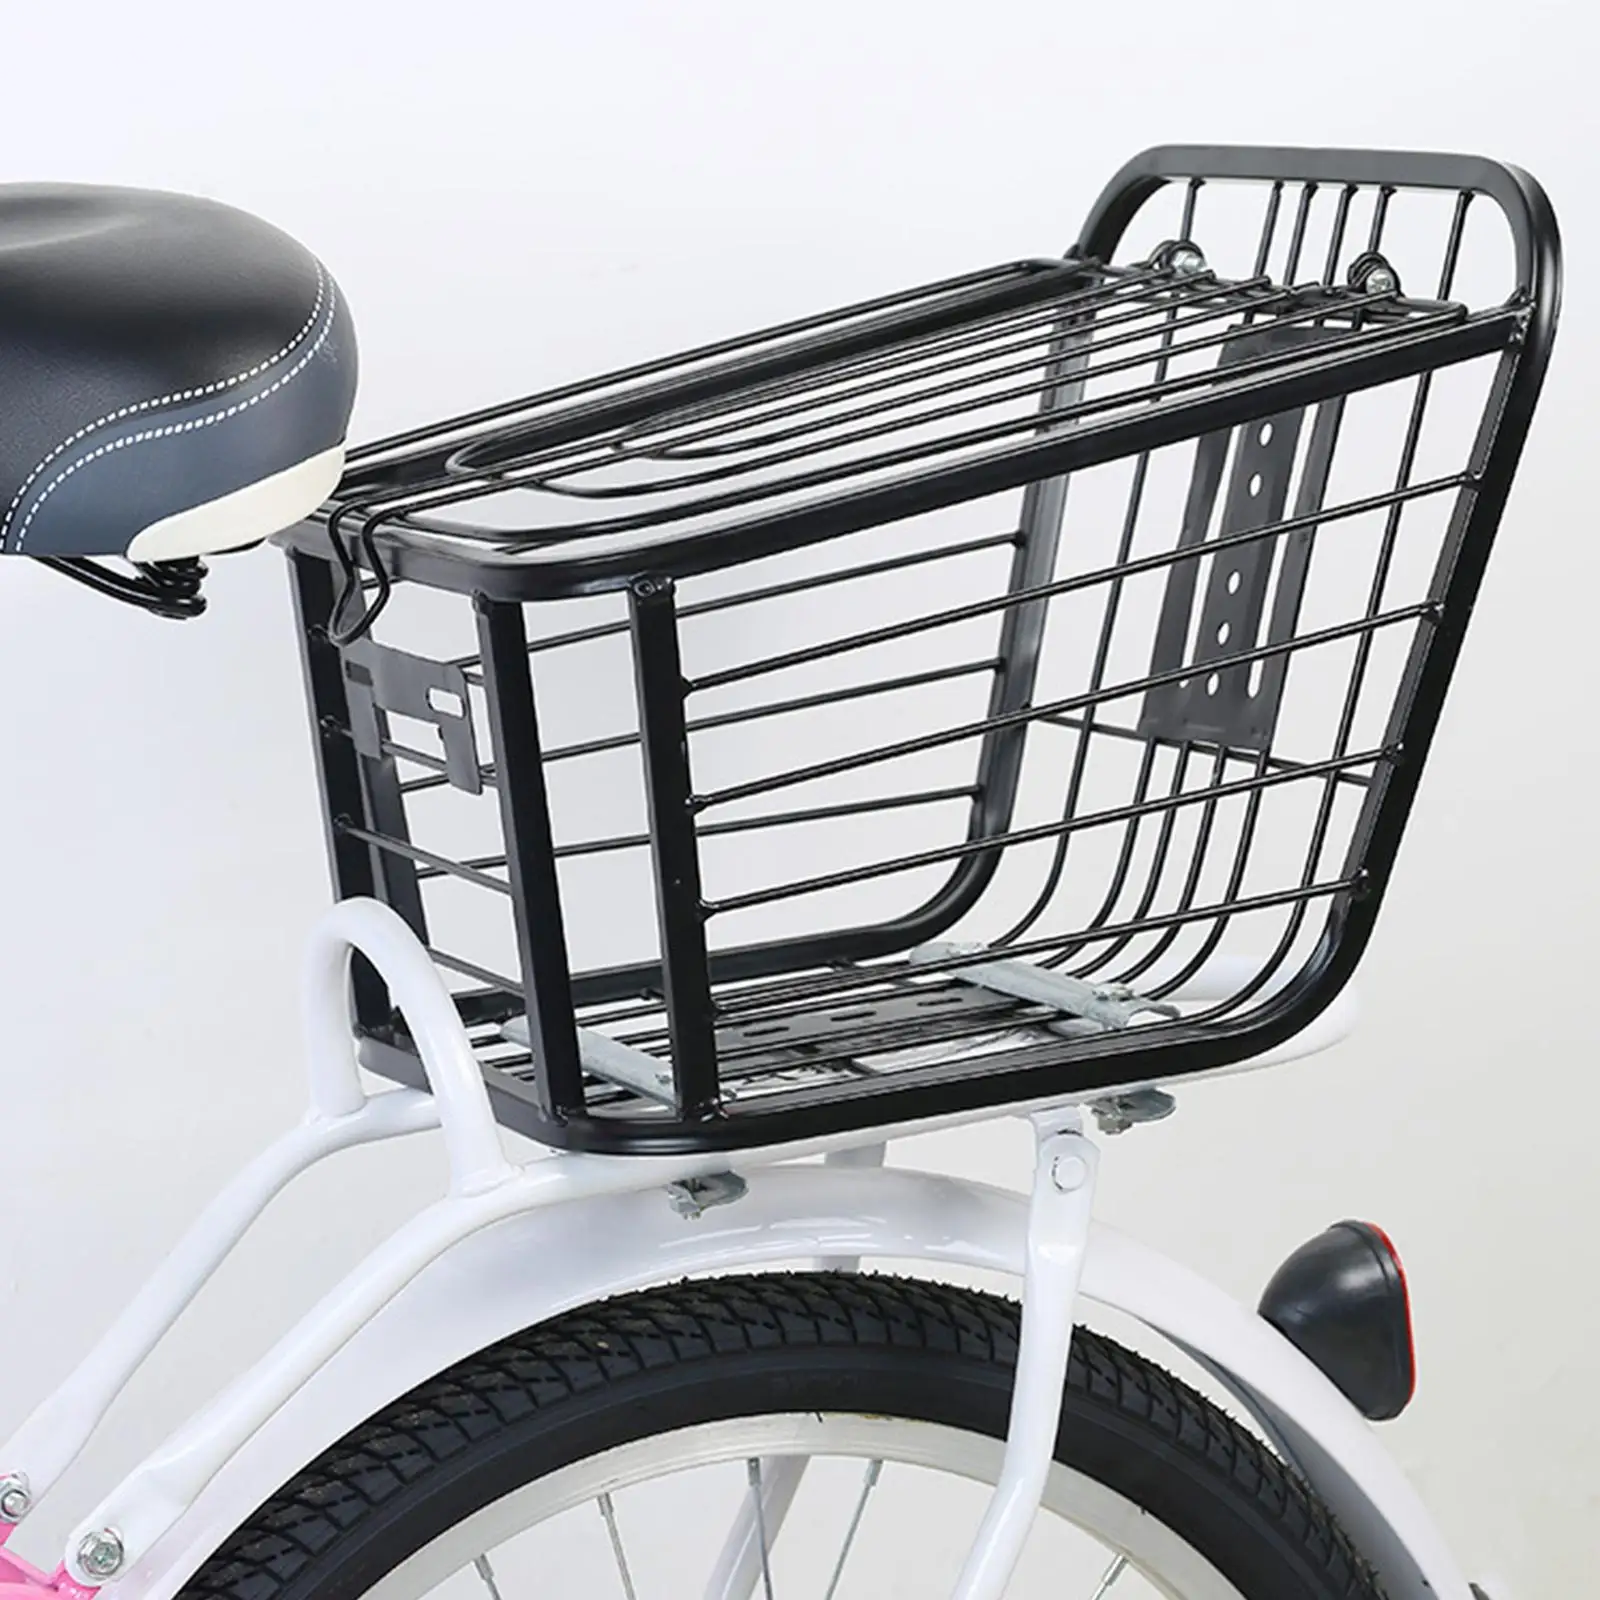 Rear Bike Basket Riding Durable Luggage Travel Organizer for